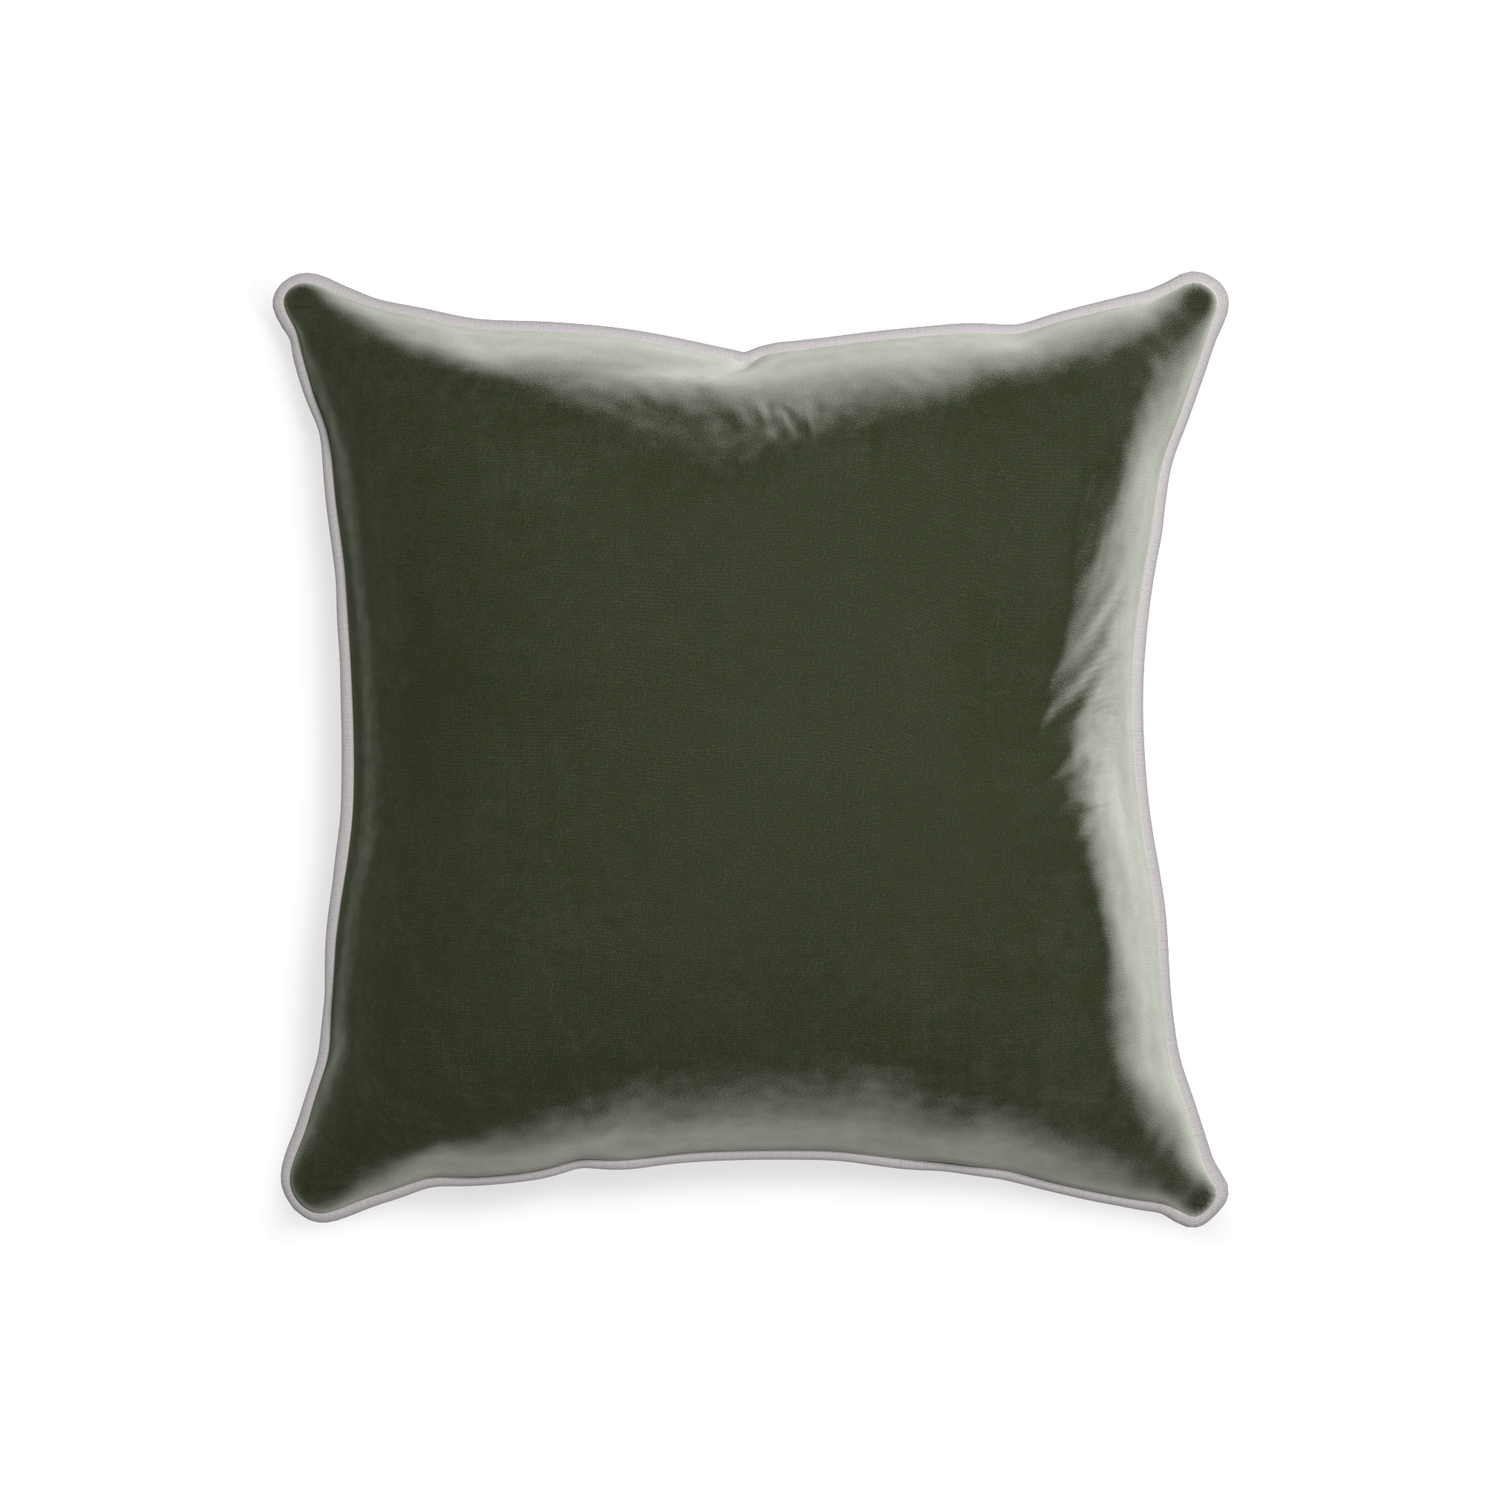 square fern green velvet pillow with light grey piping